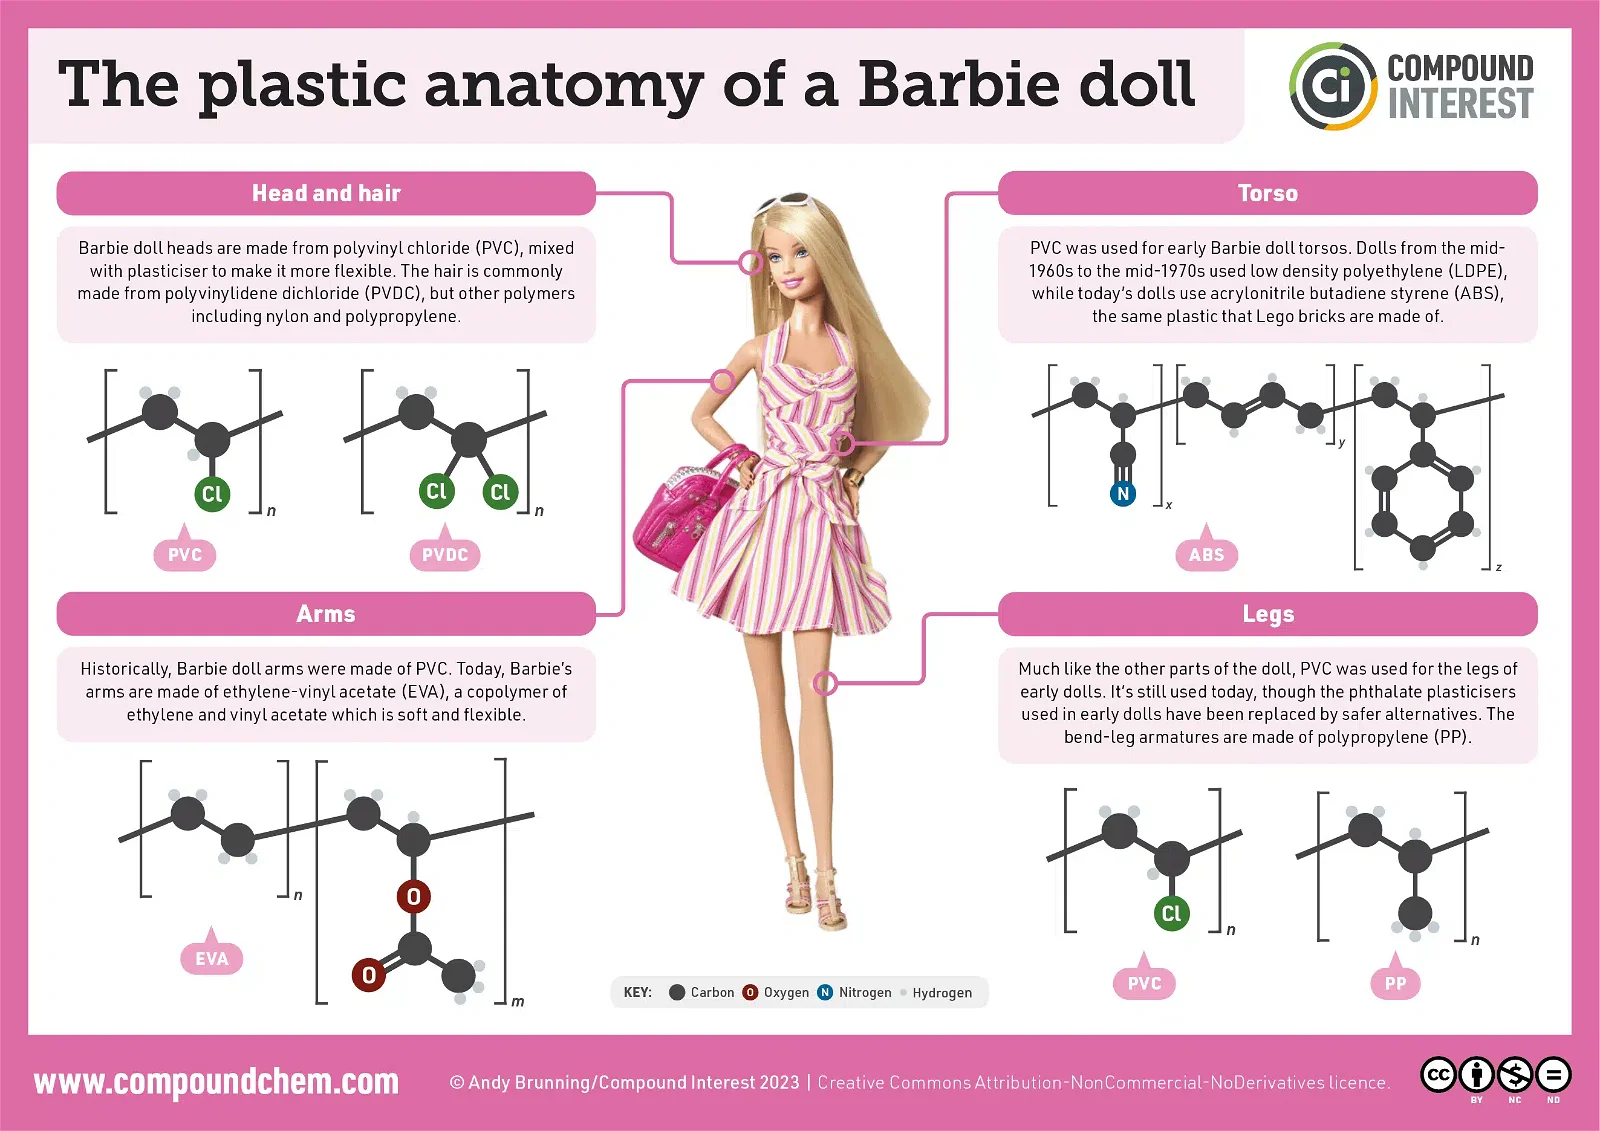 Barbie doll plastic anatomy